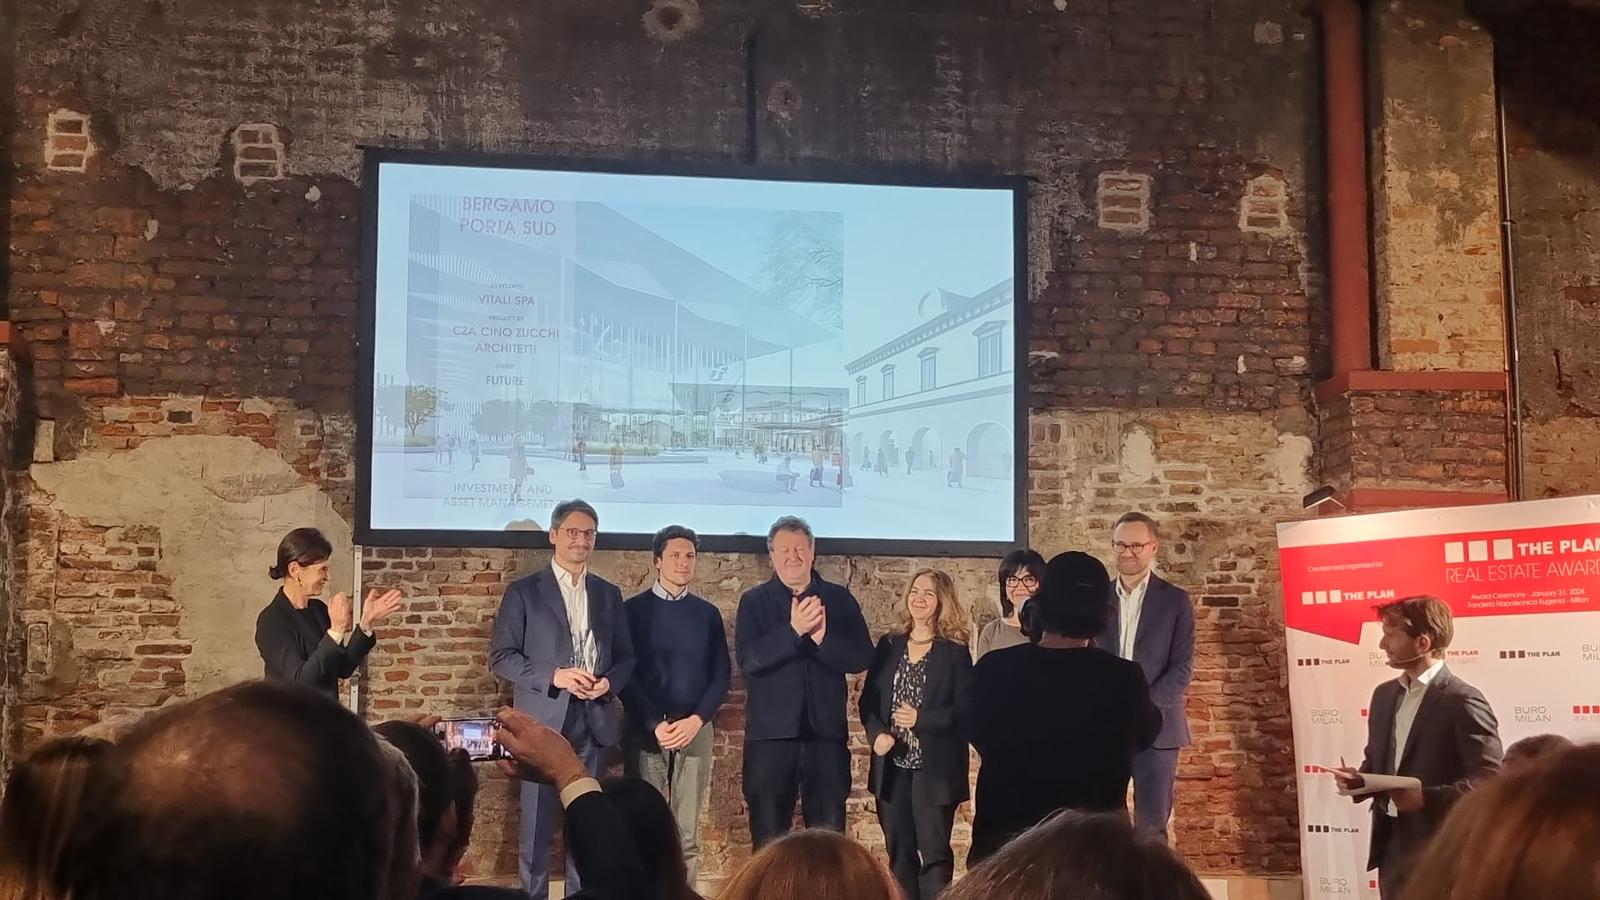 Vitali Spa vince The Plan Real Estate Award 2023